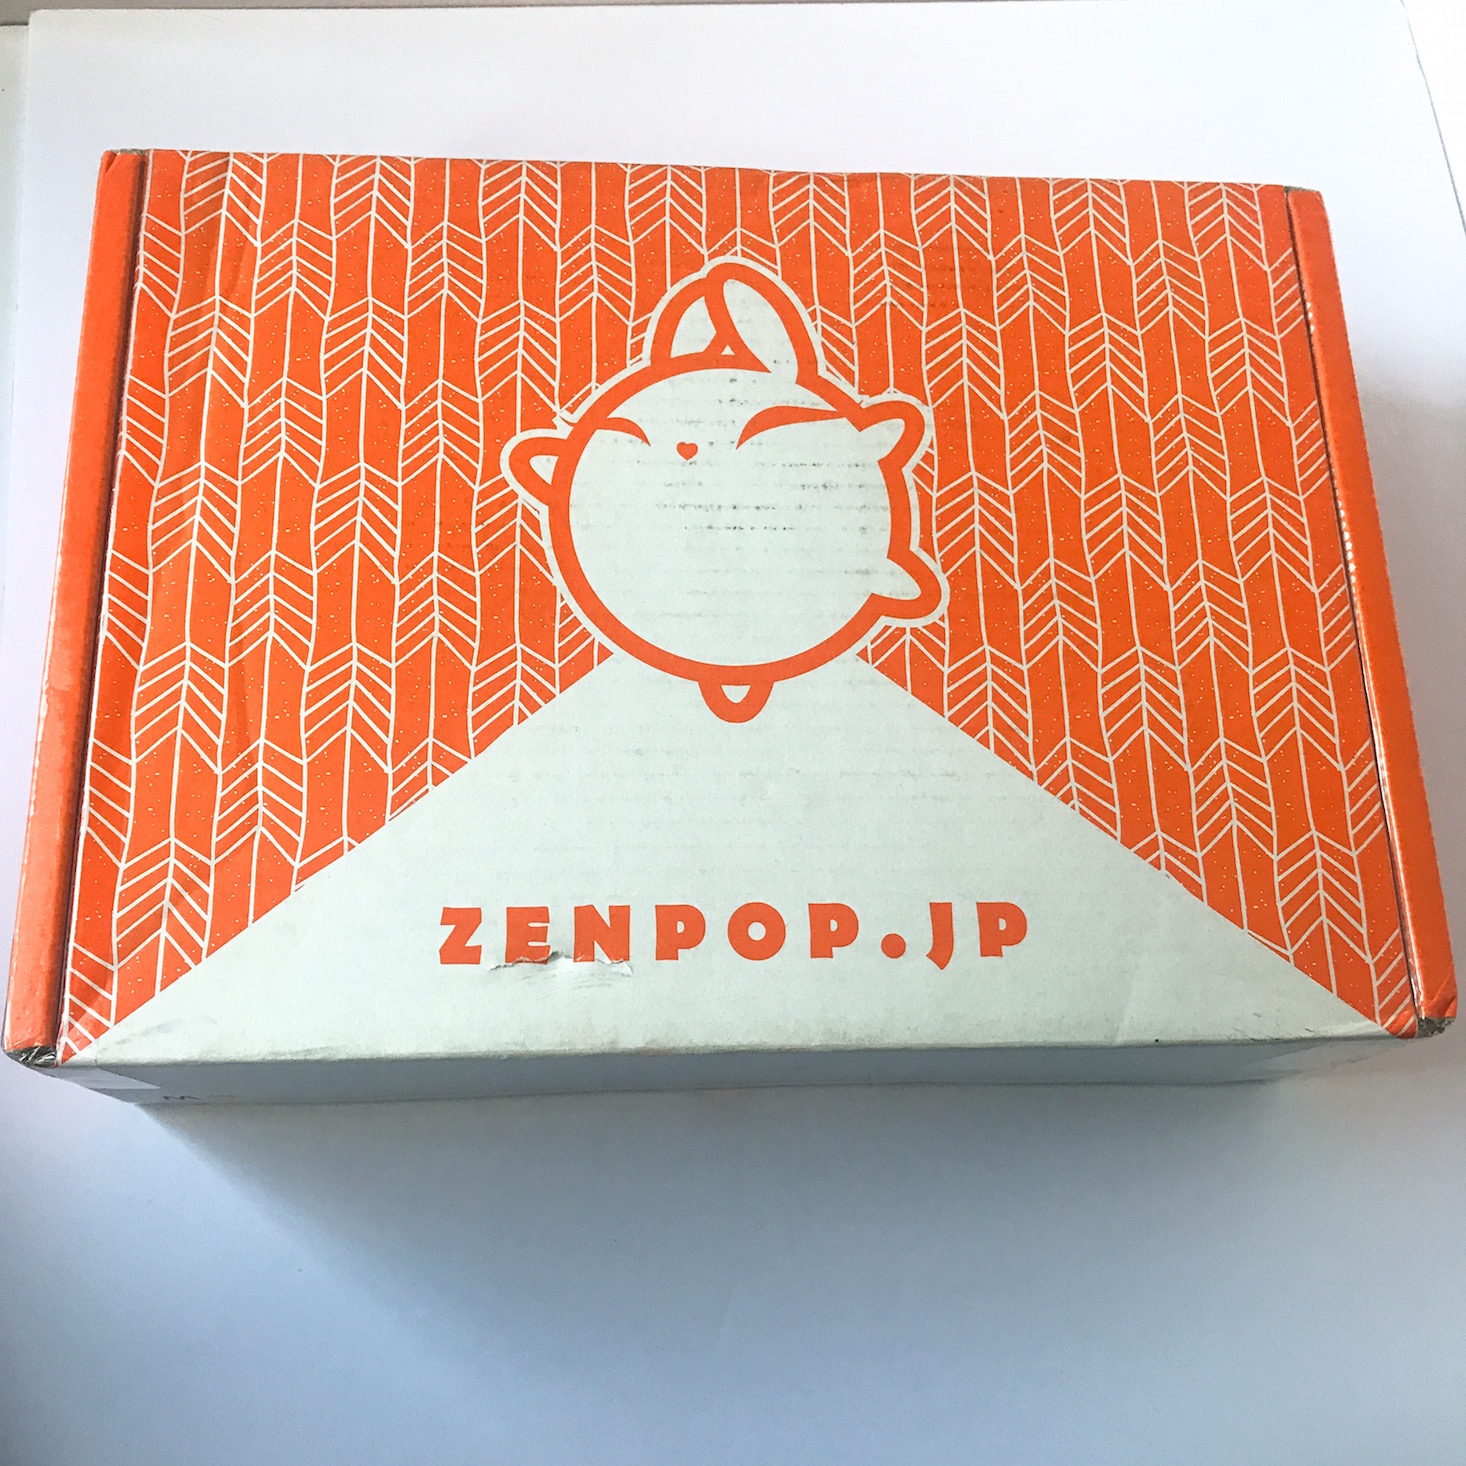 ZenPop Japanese Sweets + Ramen Mix Pack Review – March 2018